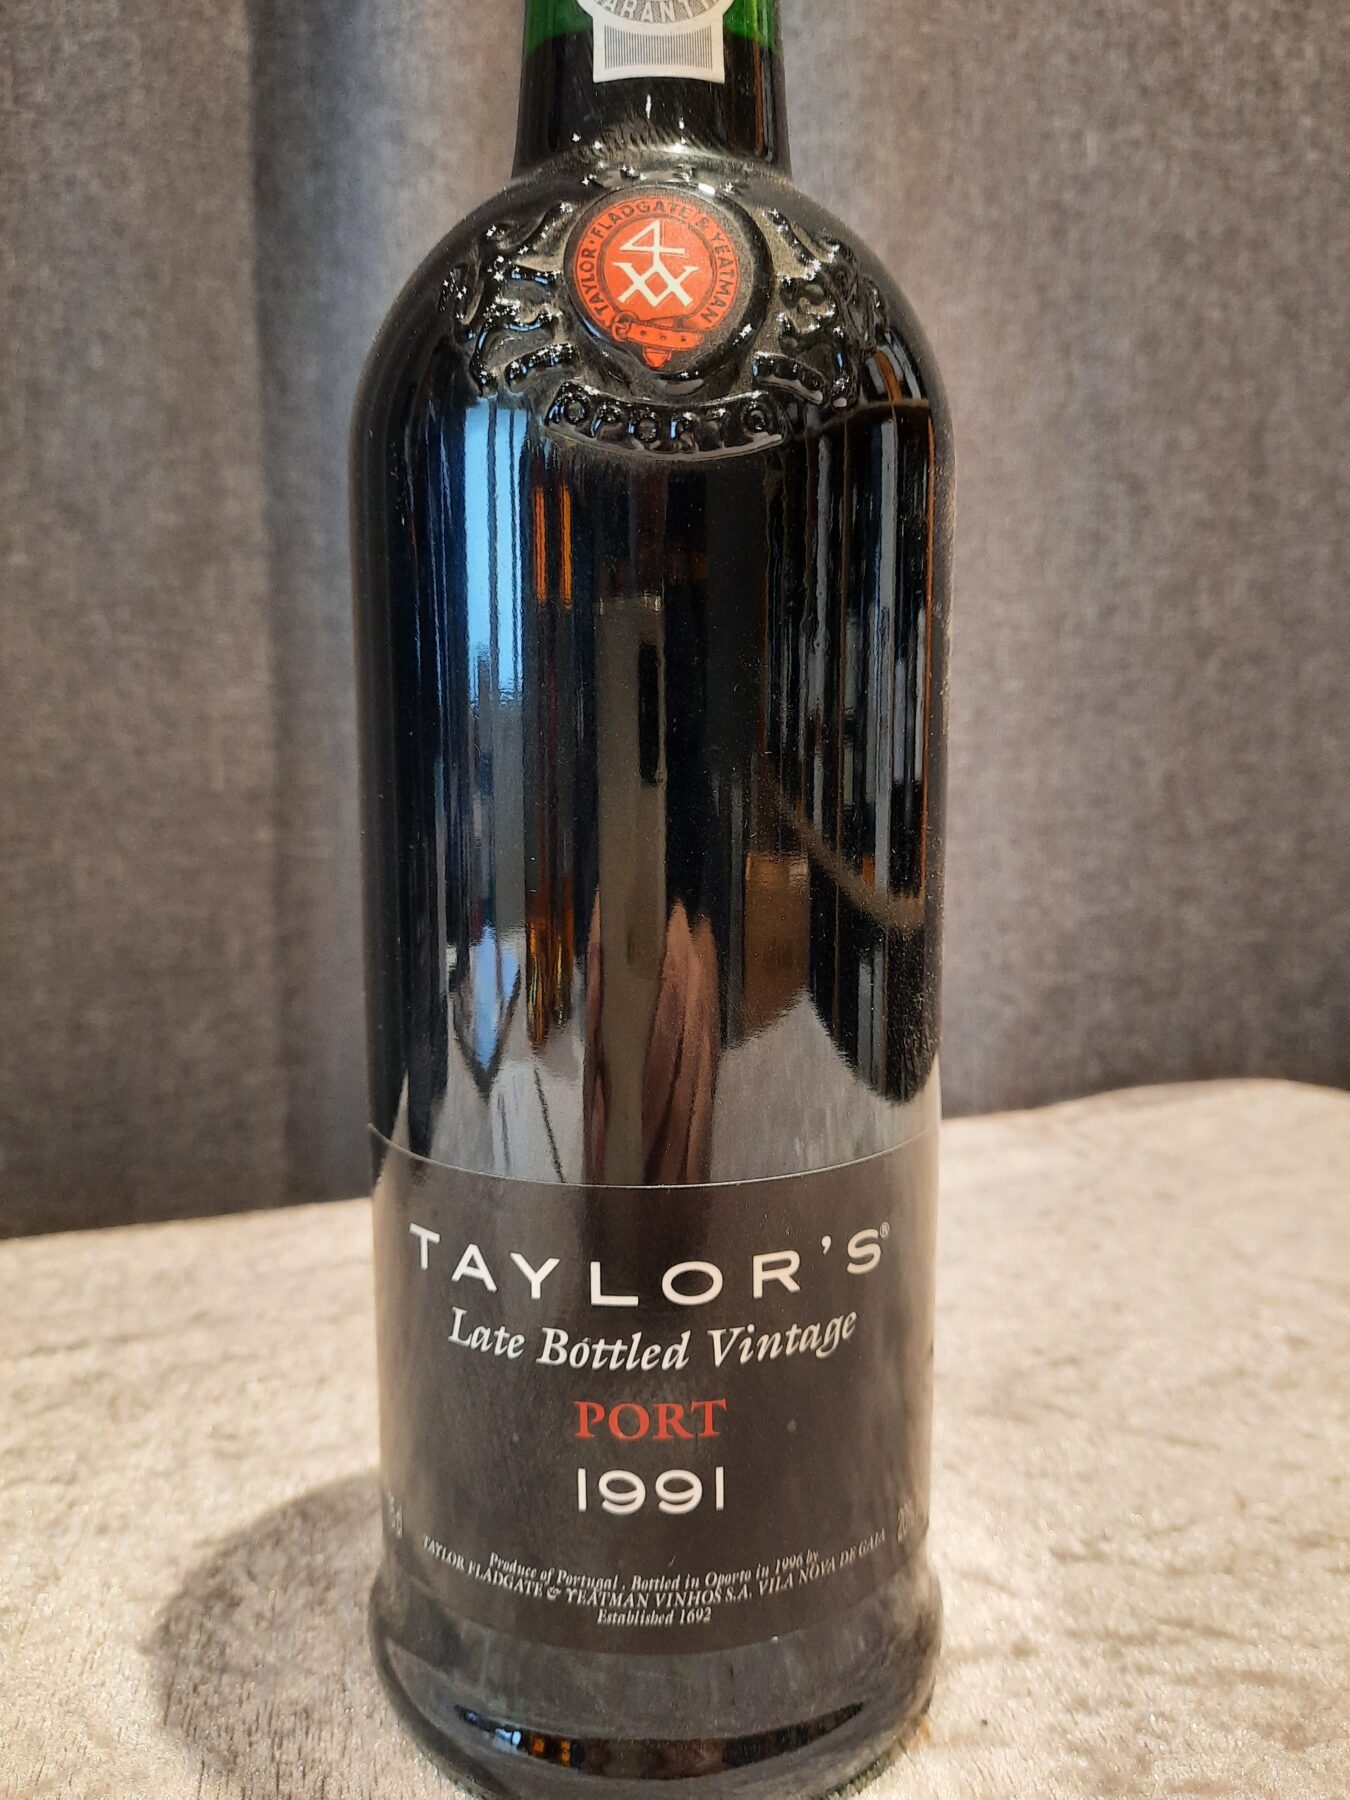 Taylors LBV 1991